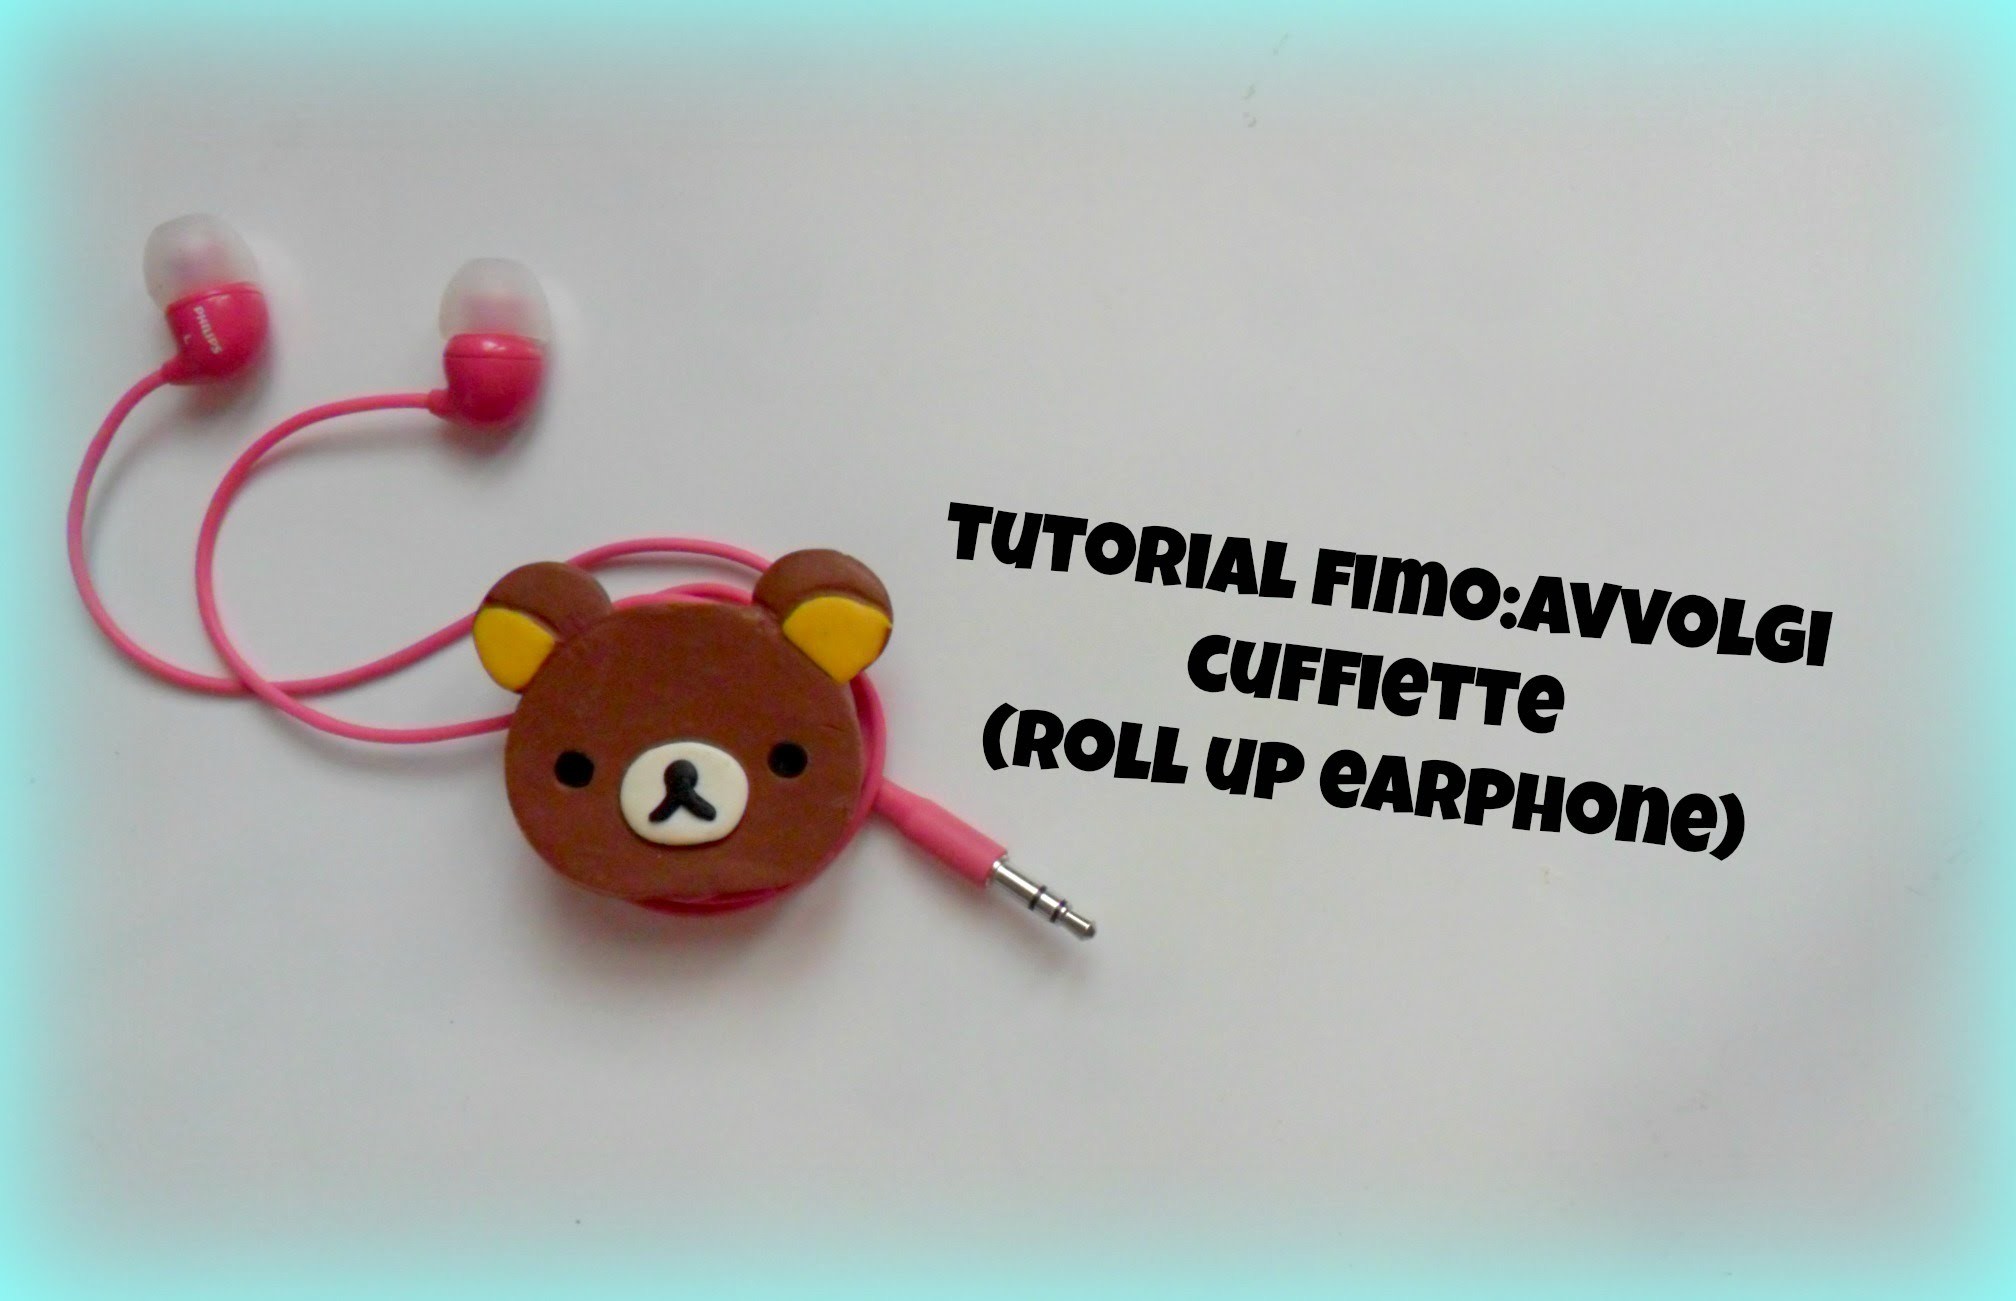 Tutorial fimo: avvolgi cuffiette rilakkuma (polymerclay tutorial roll up earphone)